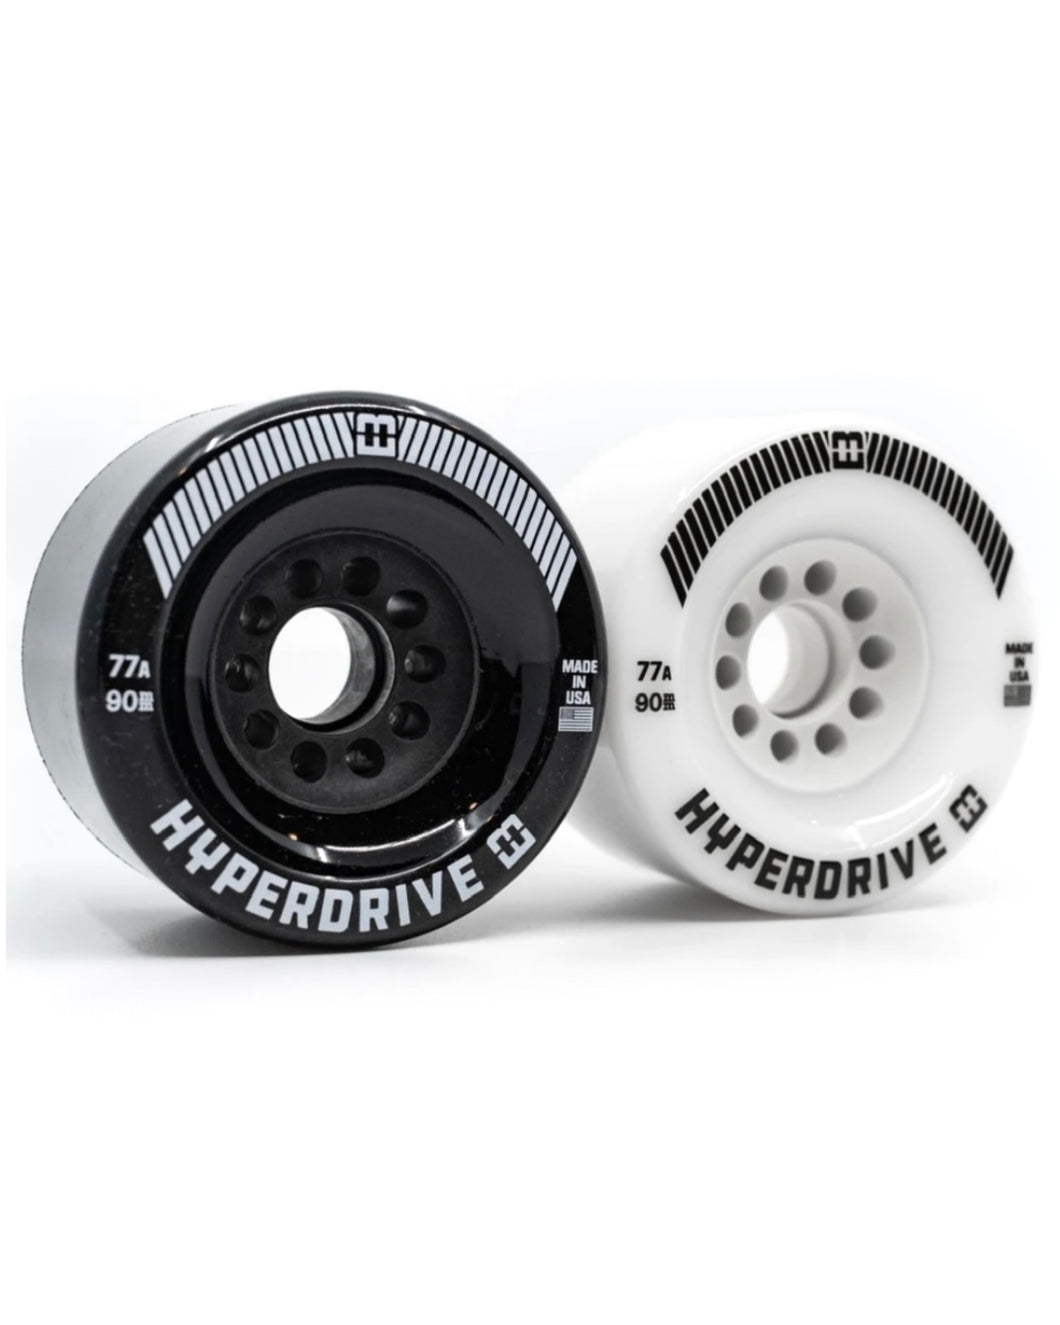 Evolve HyperDrive 90mm Electric Skateboard Wheels